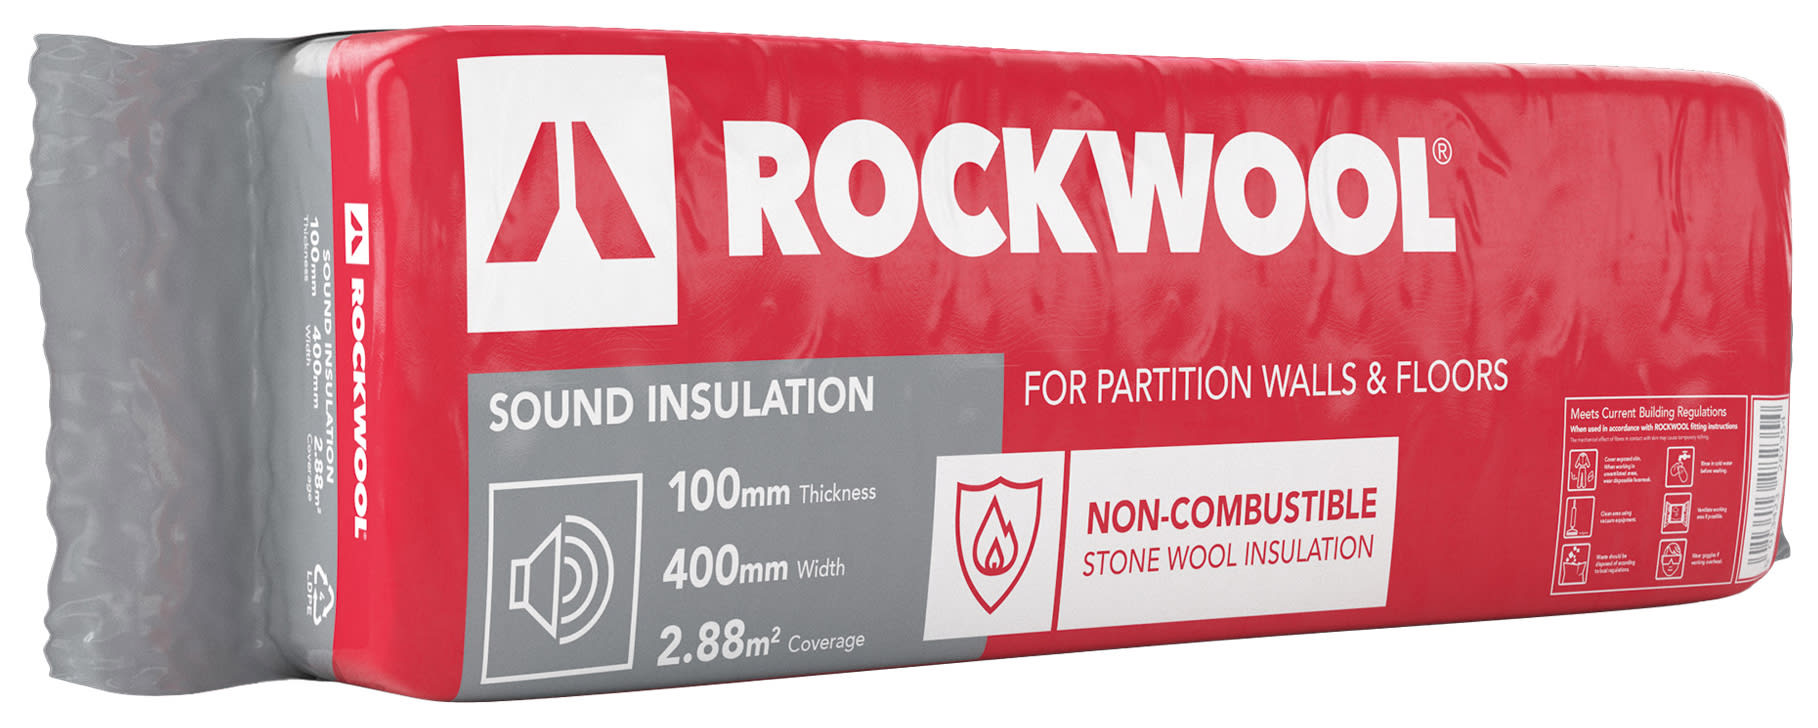 Rockwool Sound Insulation Slab - 100 x 400